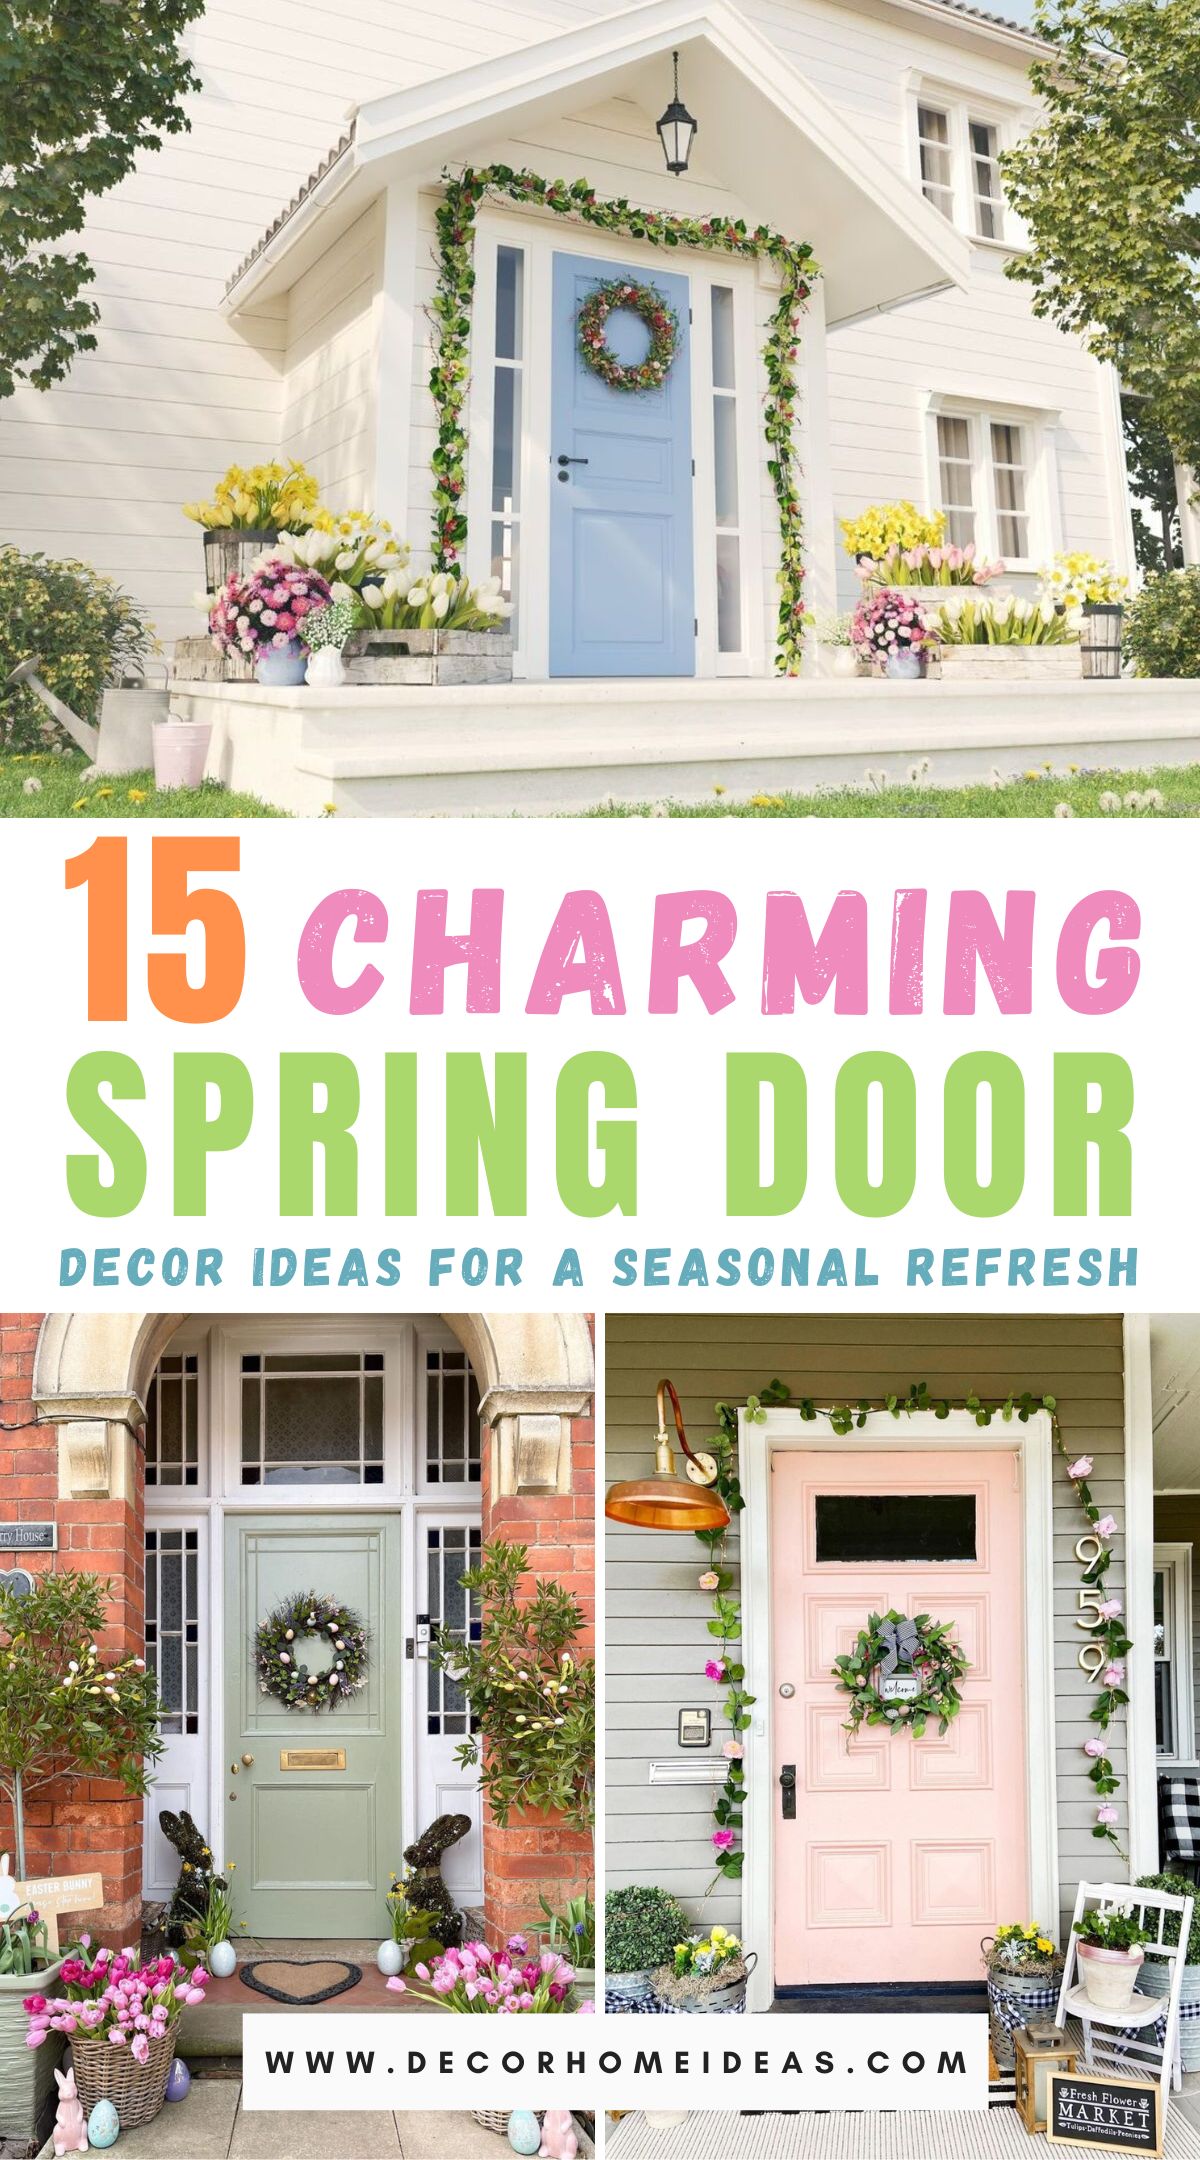 Best Spring Door Decorations and Ideas